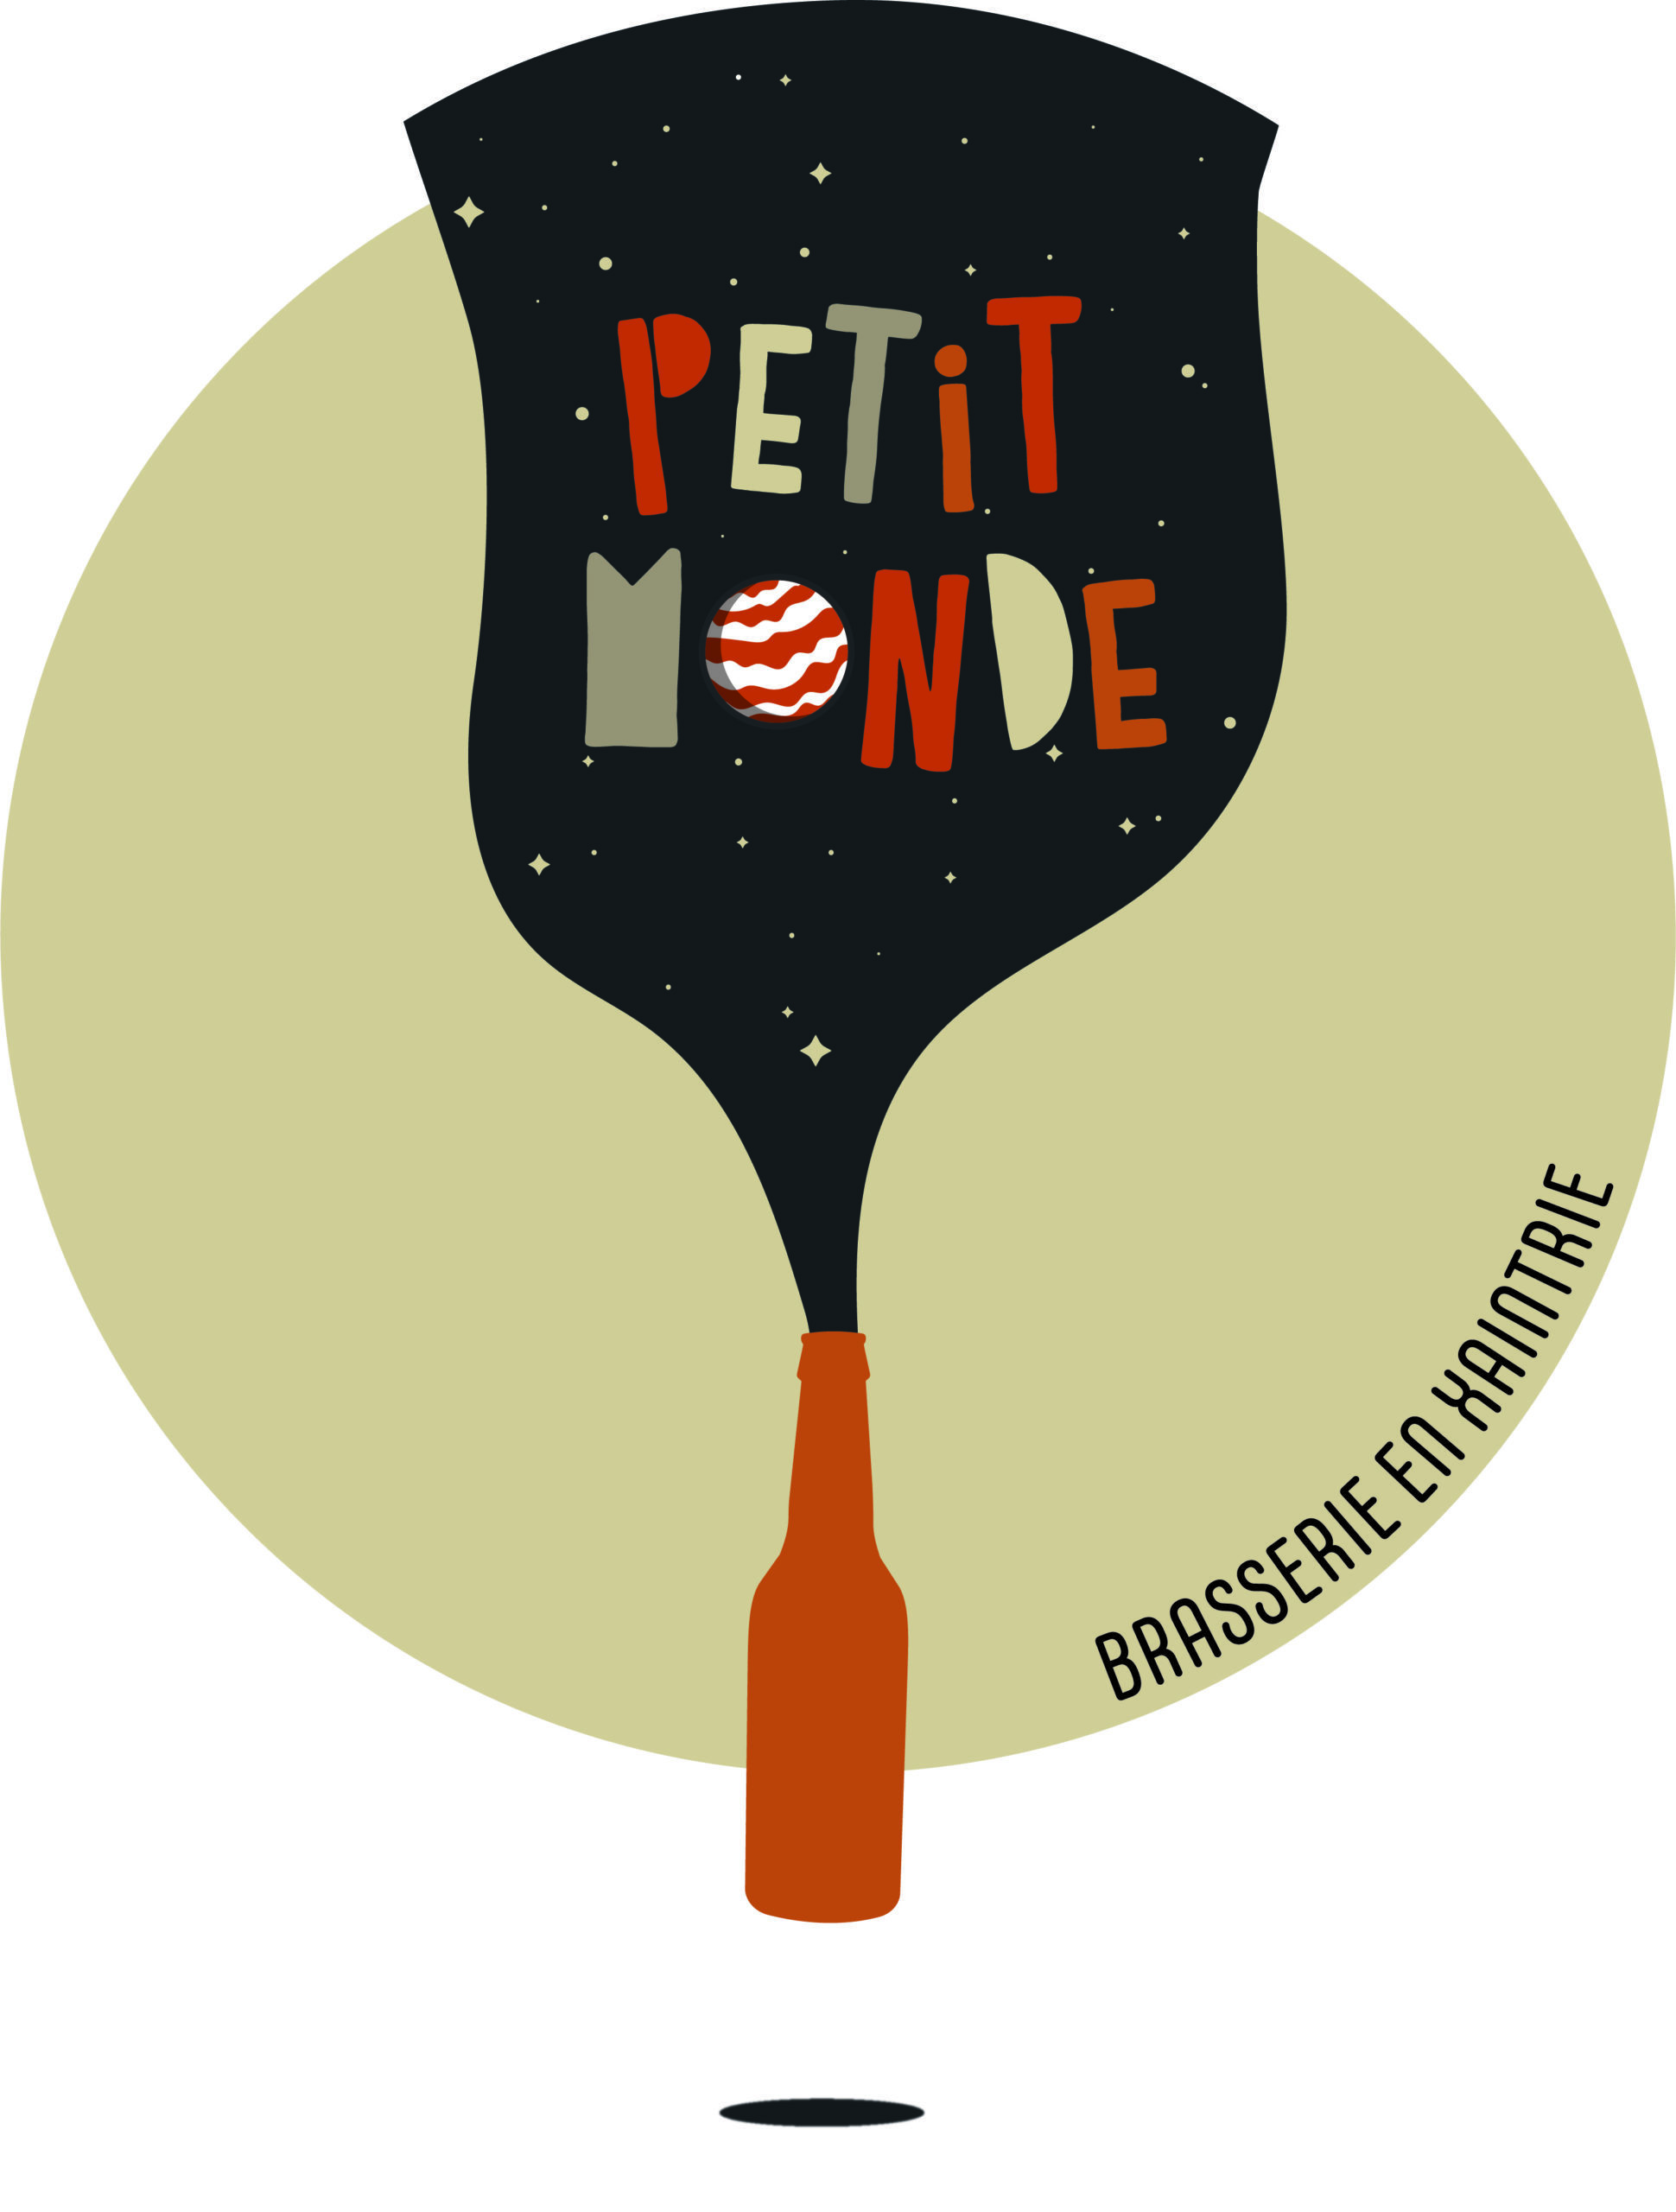 Brasserie Petit Monde